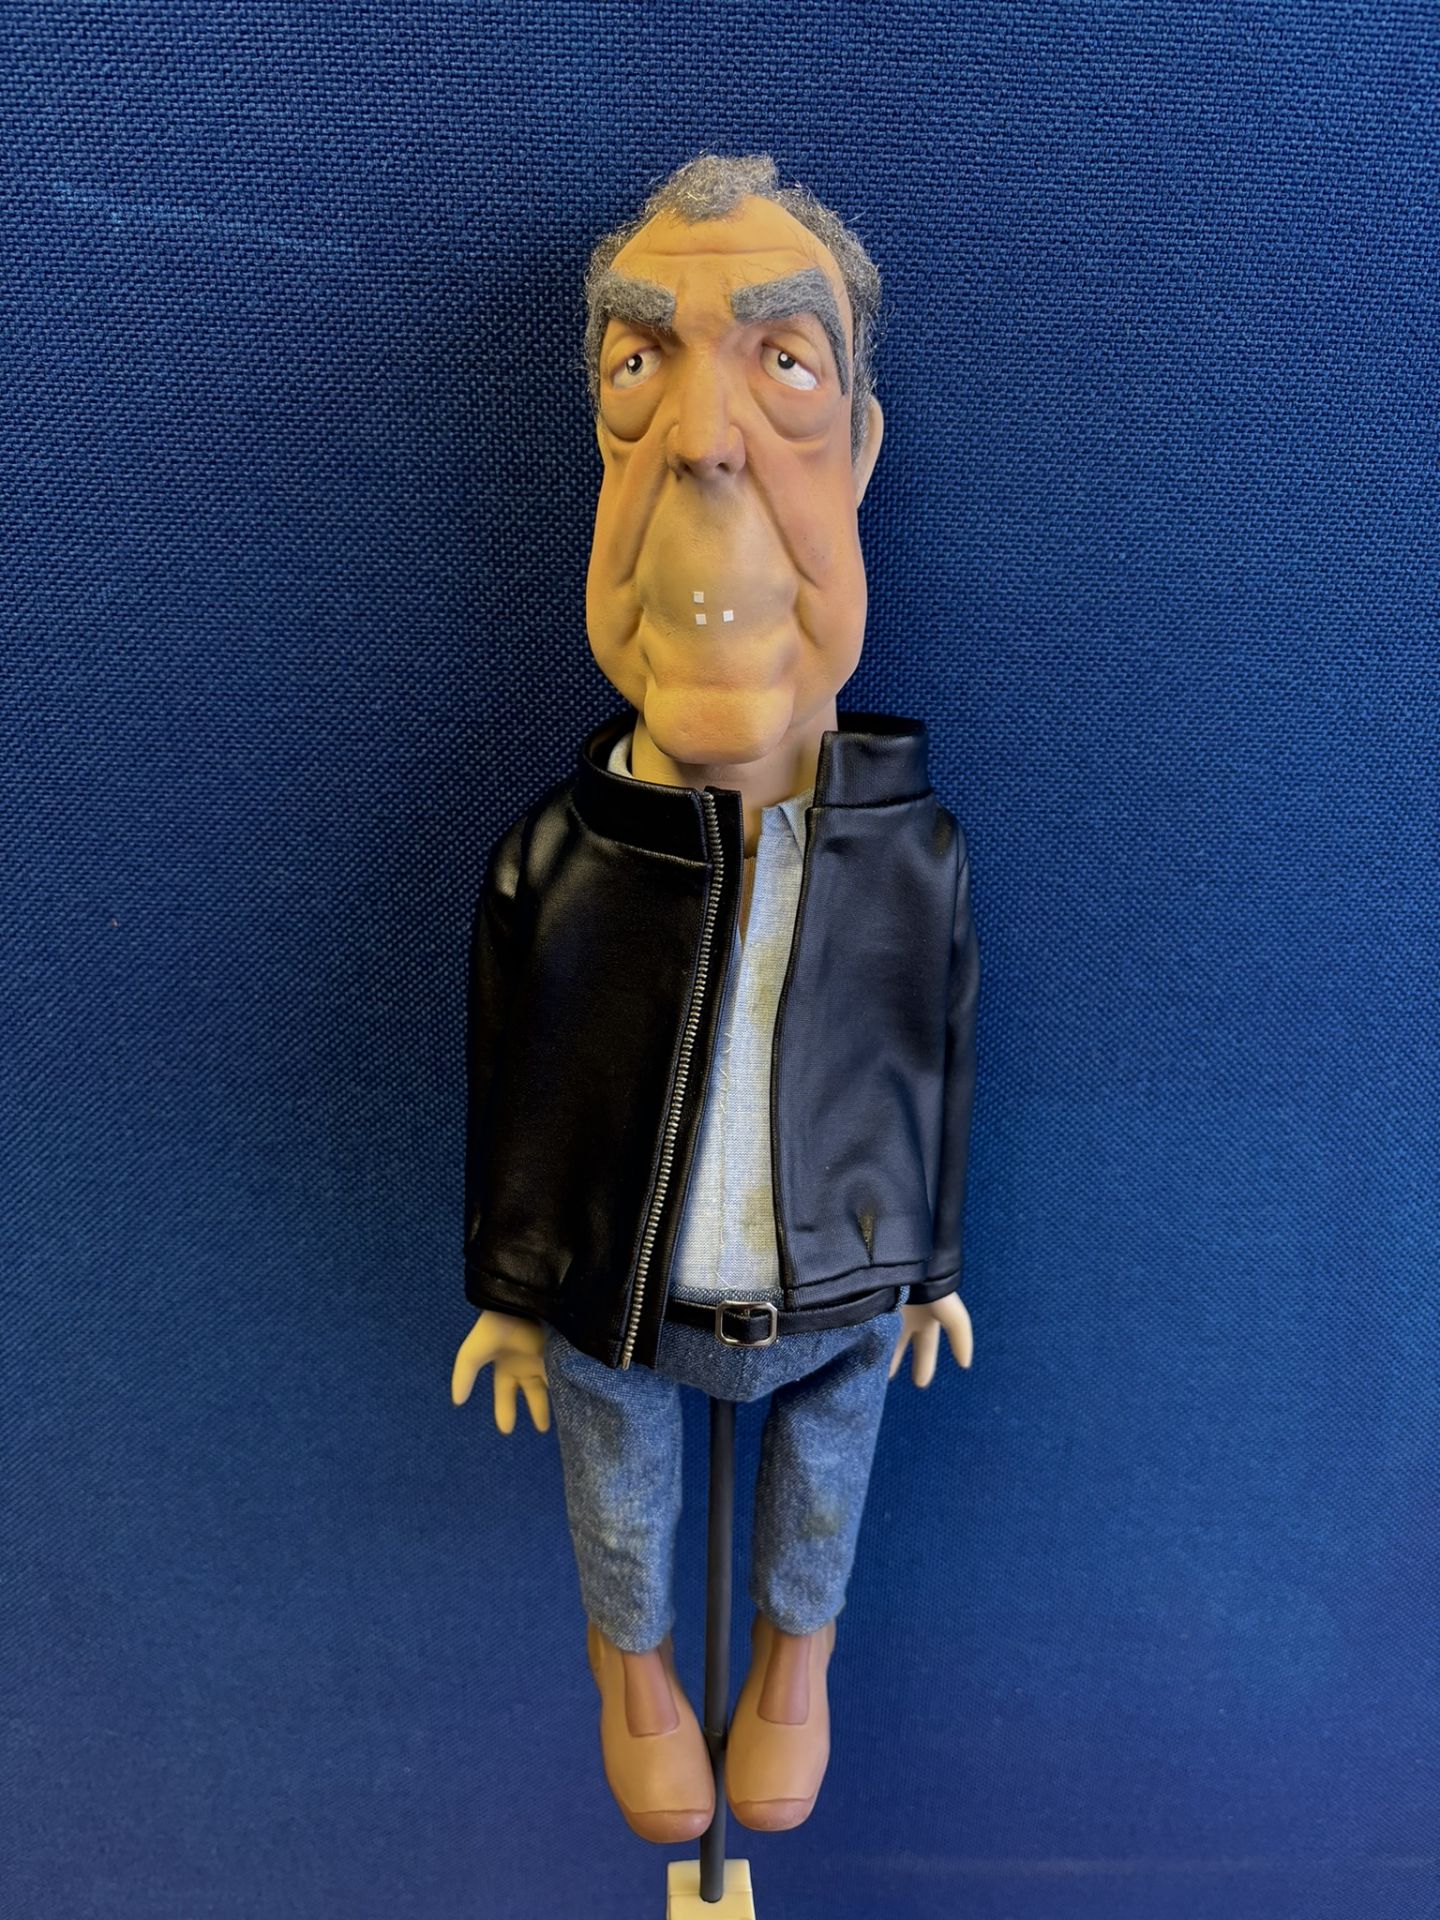 Newzoid puppet - Jeremy Clarkson - Image 2 of 3